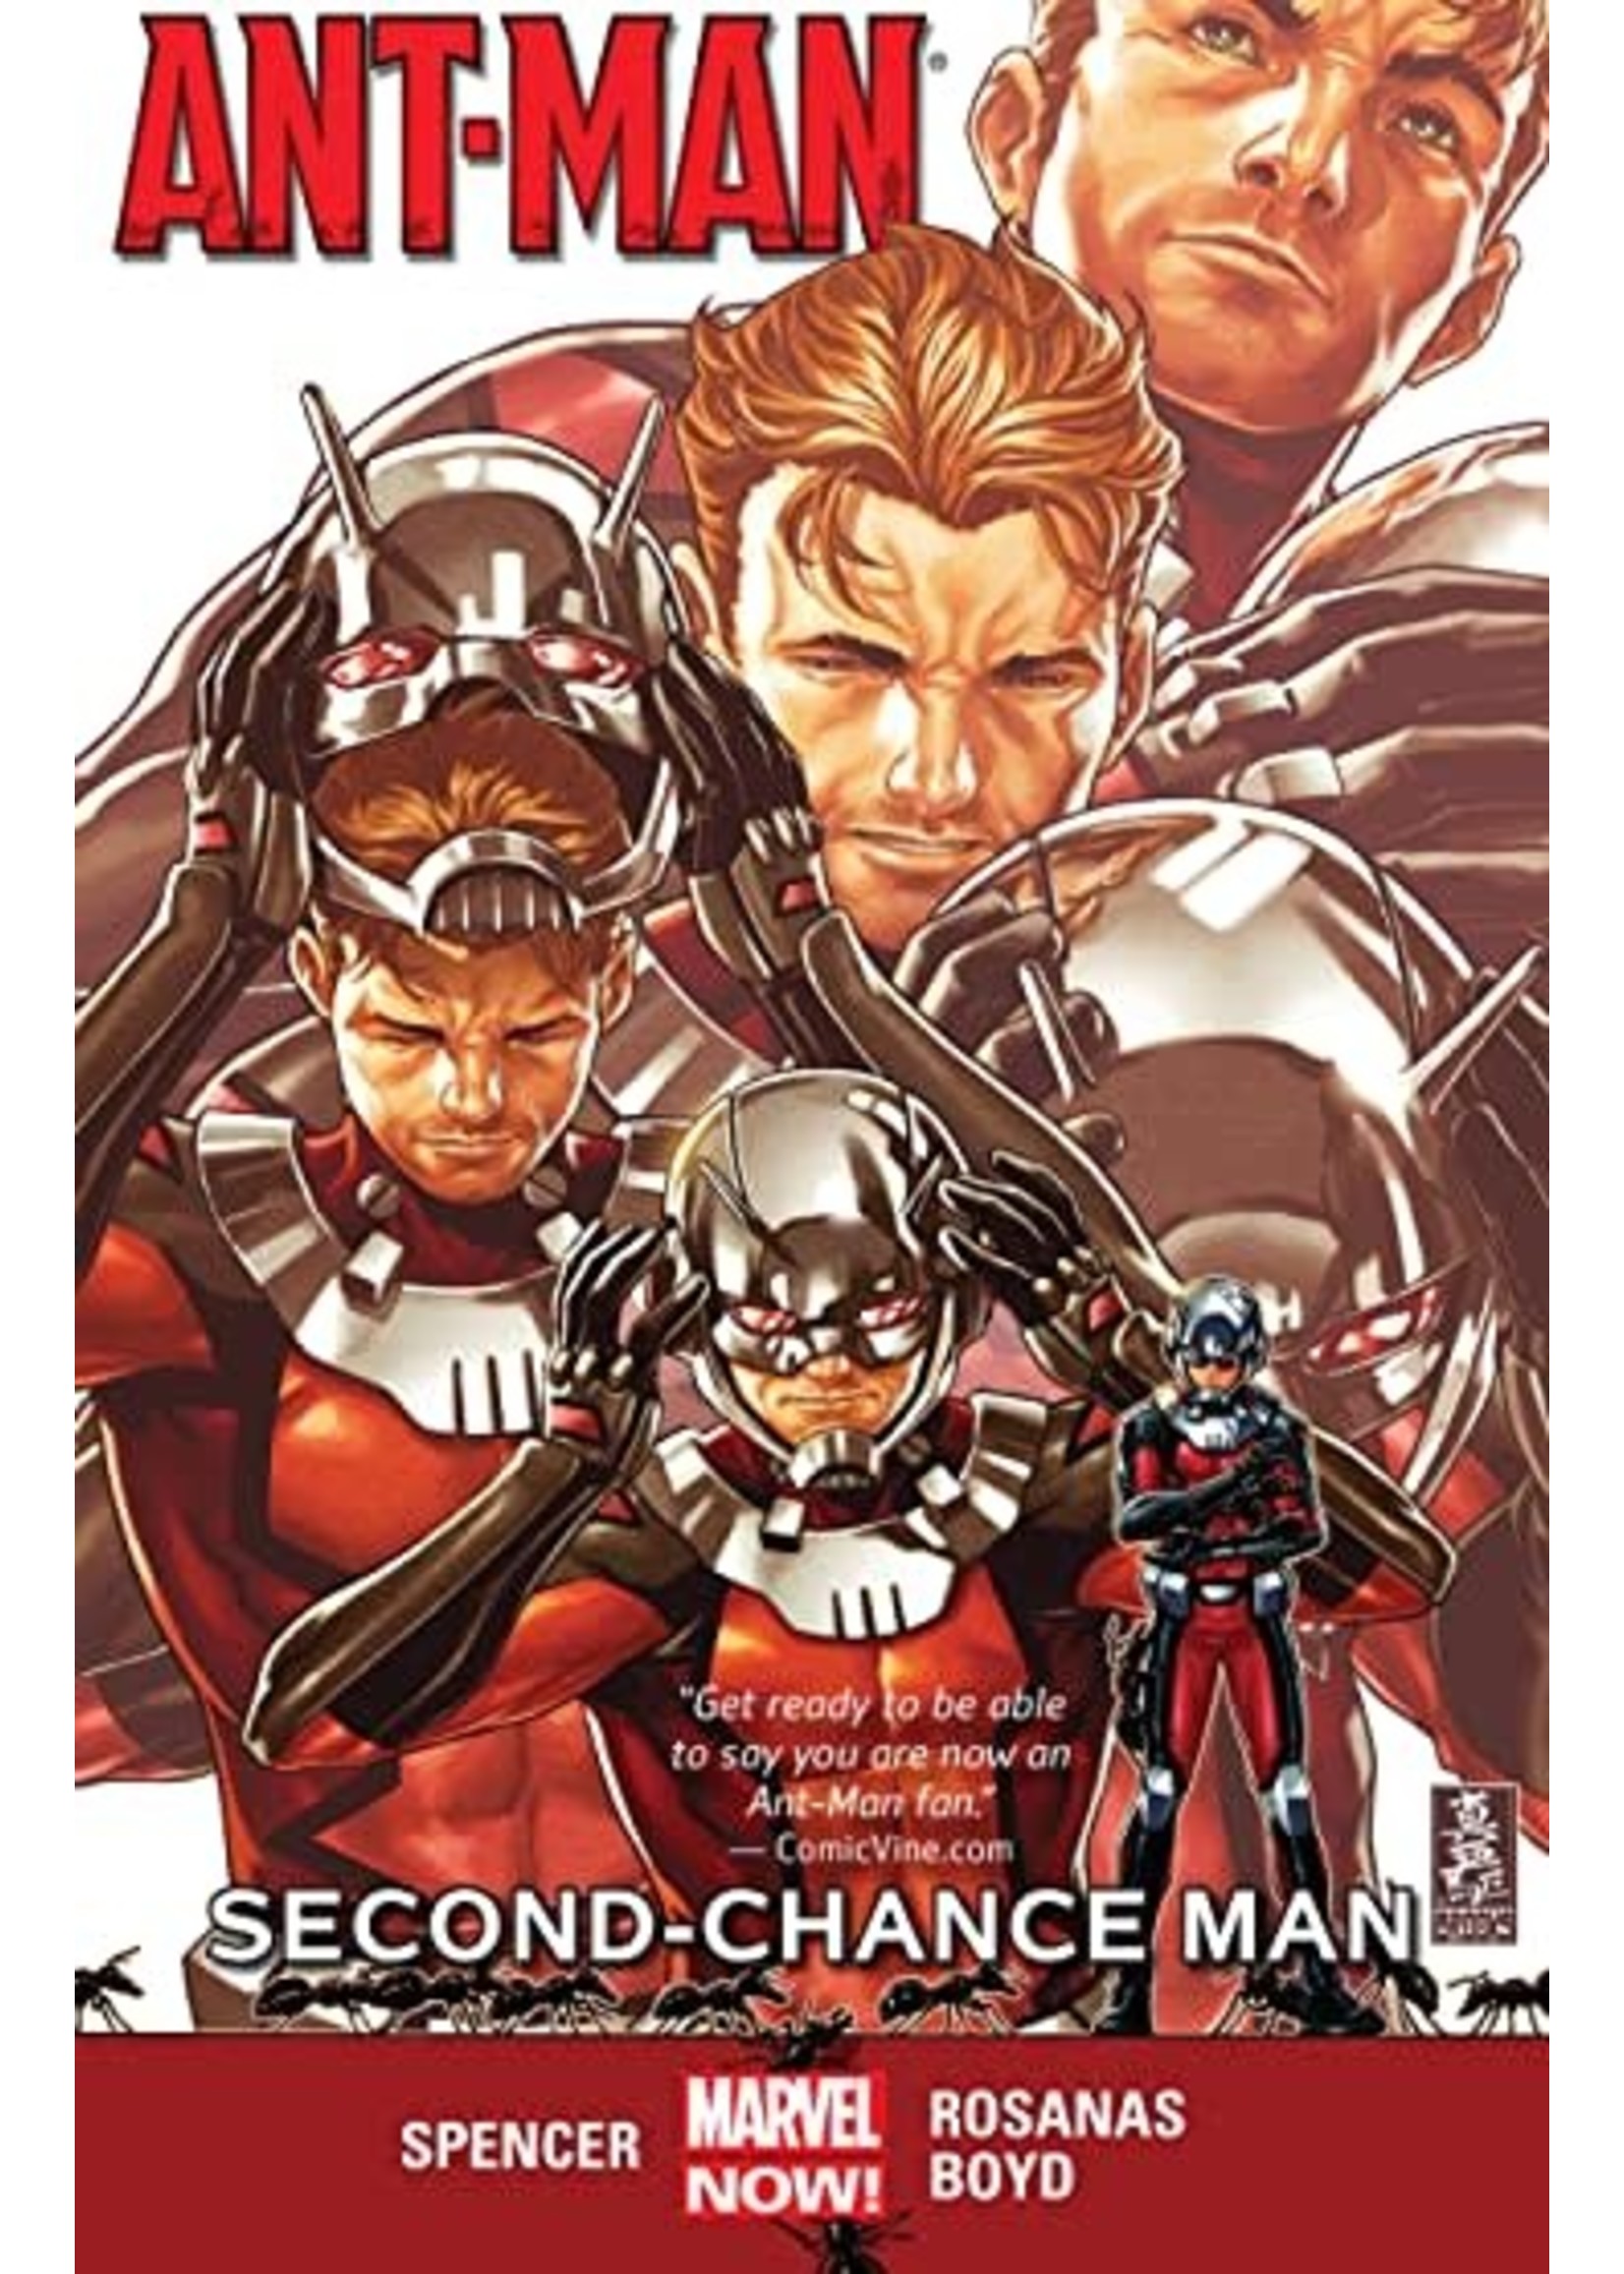 MARVEL COMICS ANT-MAN VOL 1: SECOND-CHANCE MAN